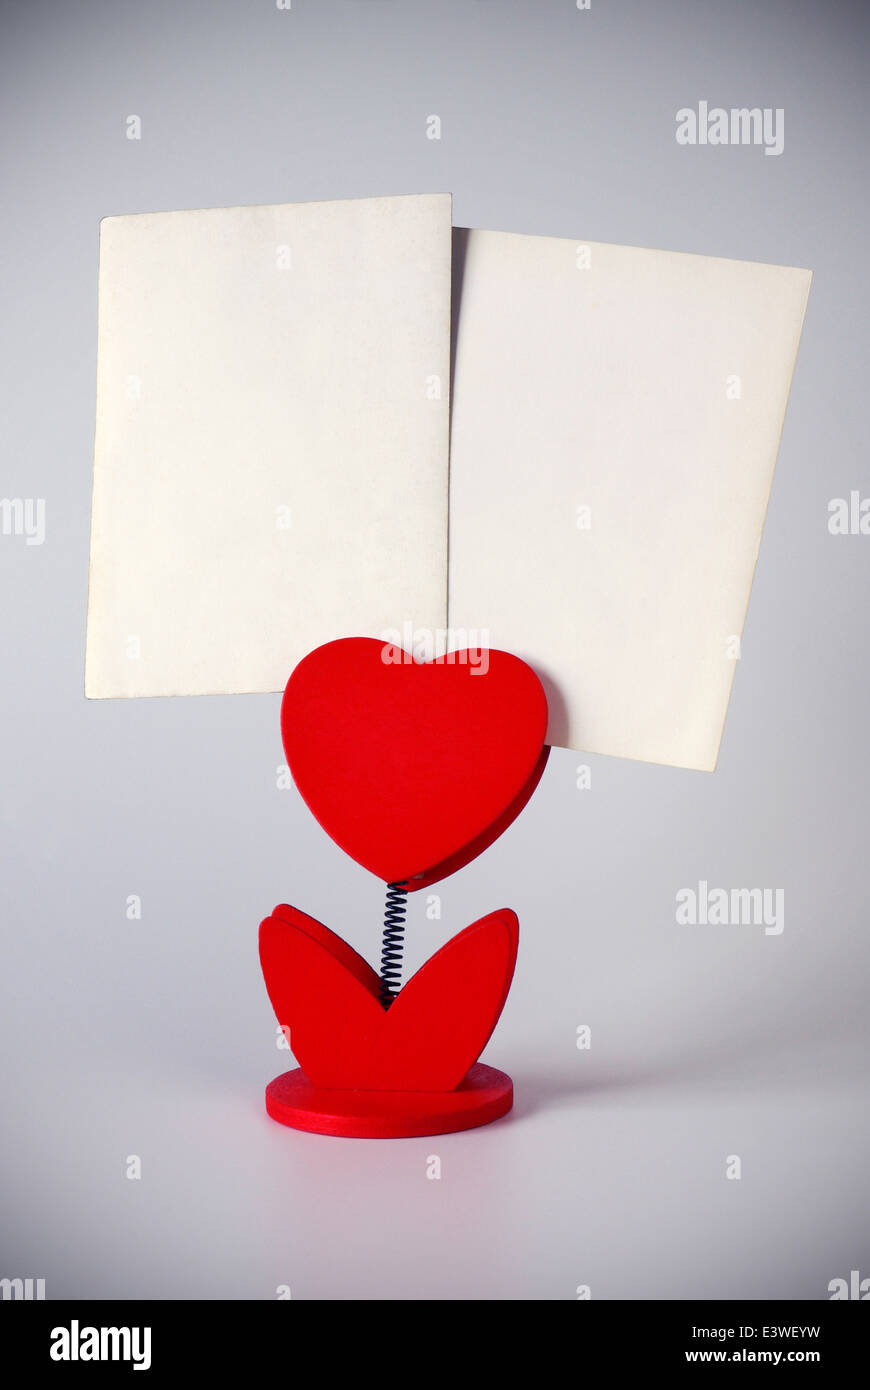 heart-shaped photo holder holding two blank photos Stock Photo